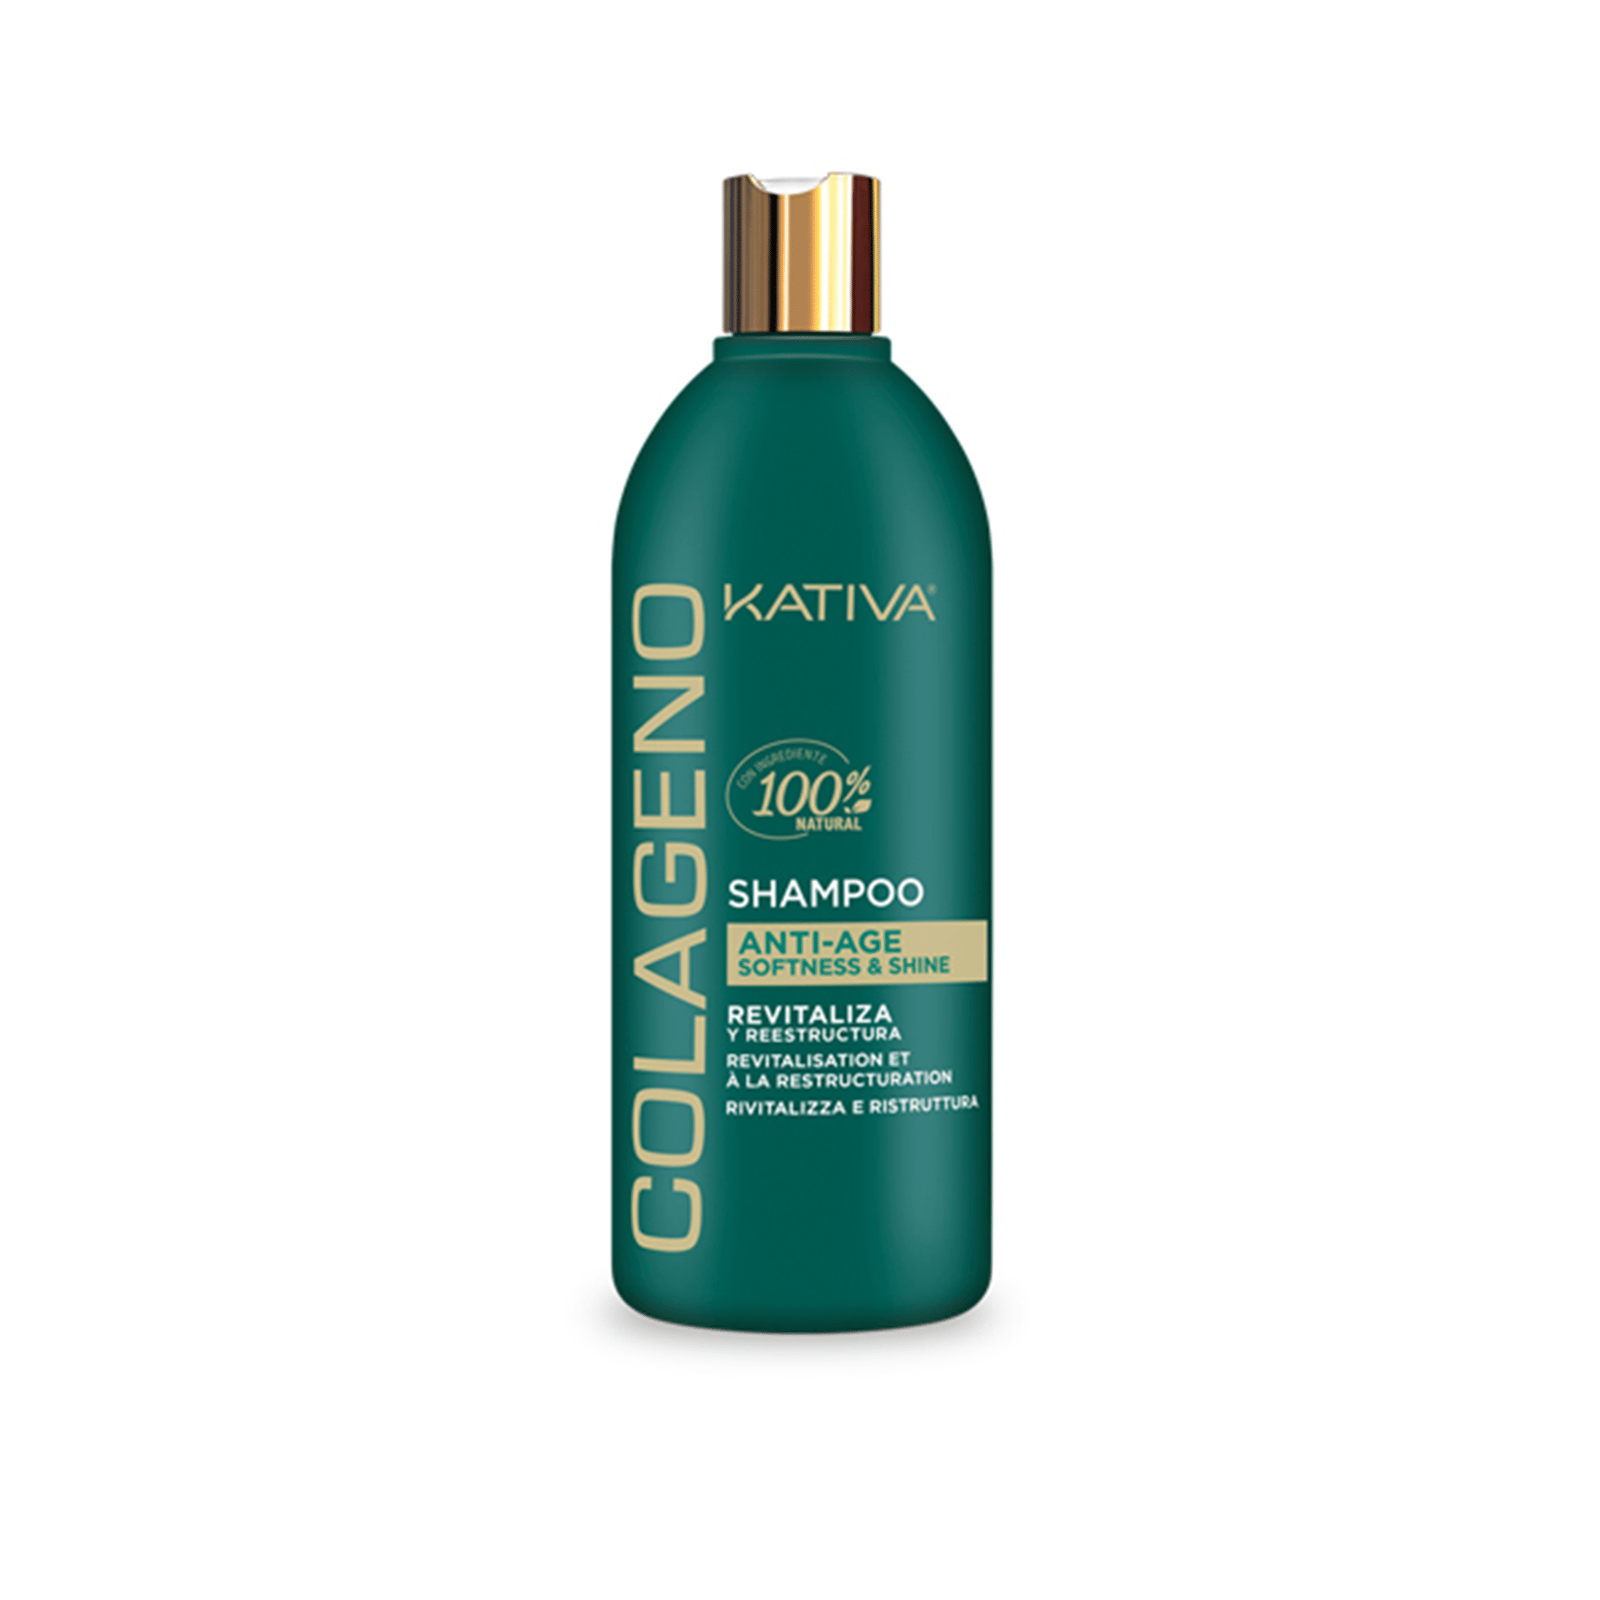 Kativa Collagen Anti-Age Softness & Shine Shampoo 500ml